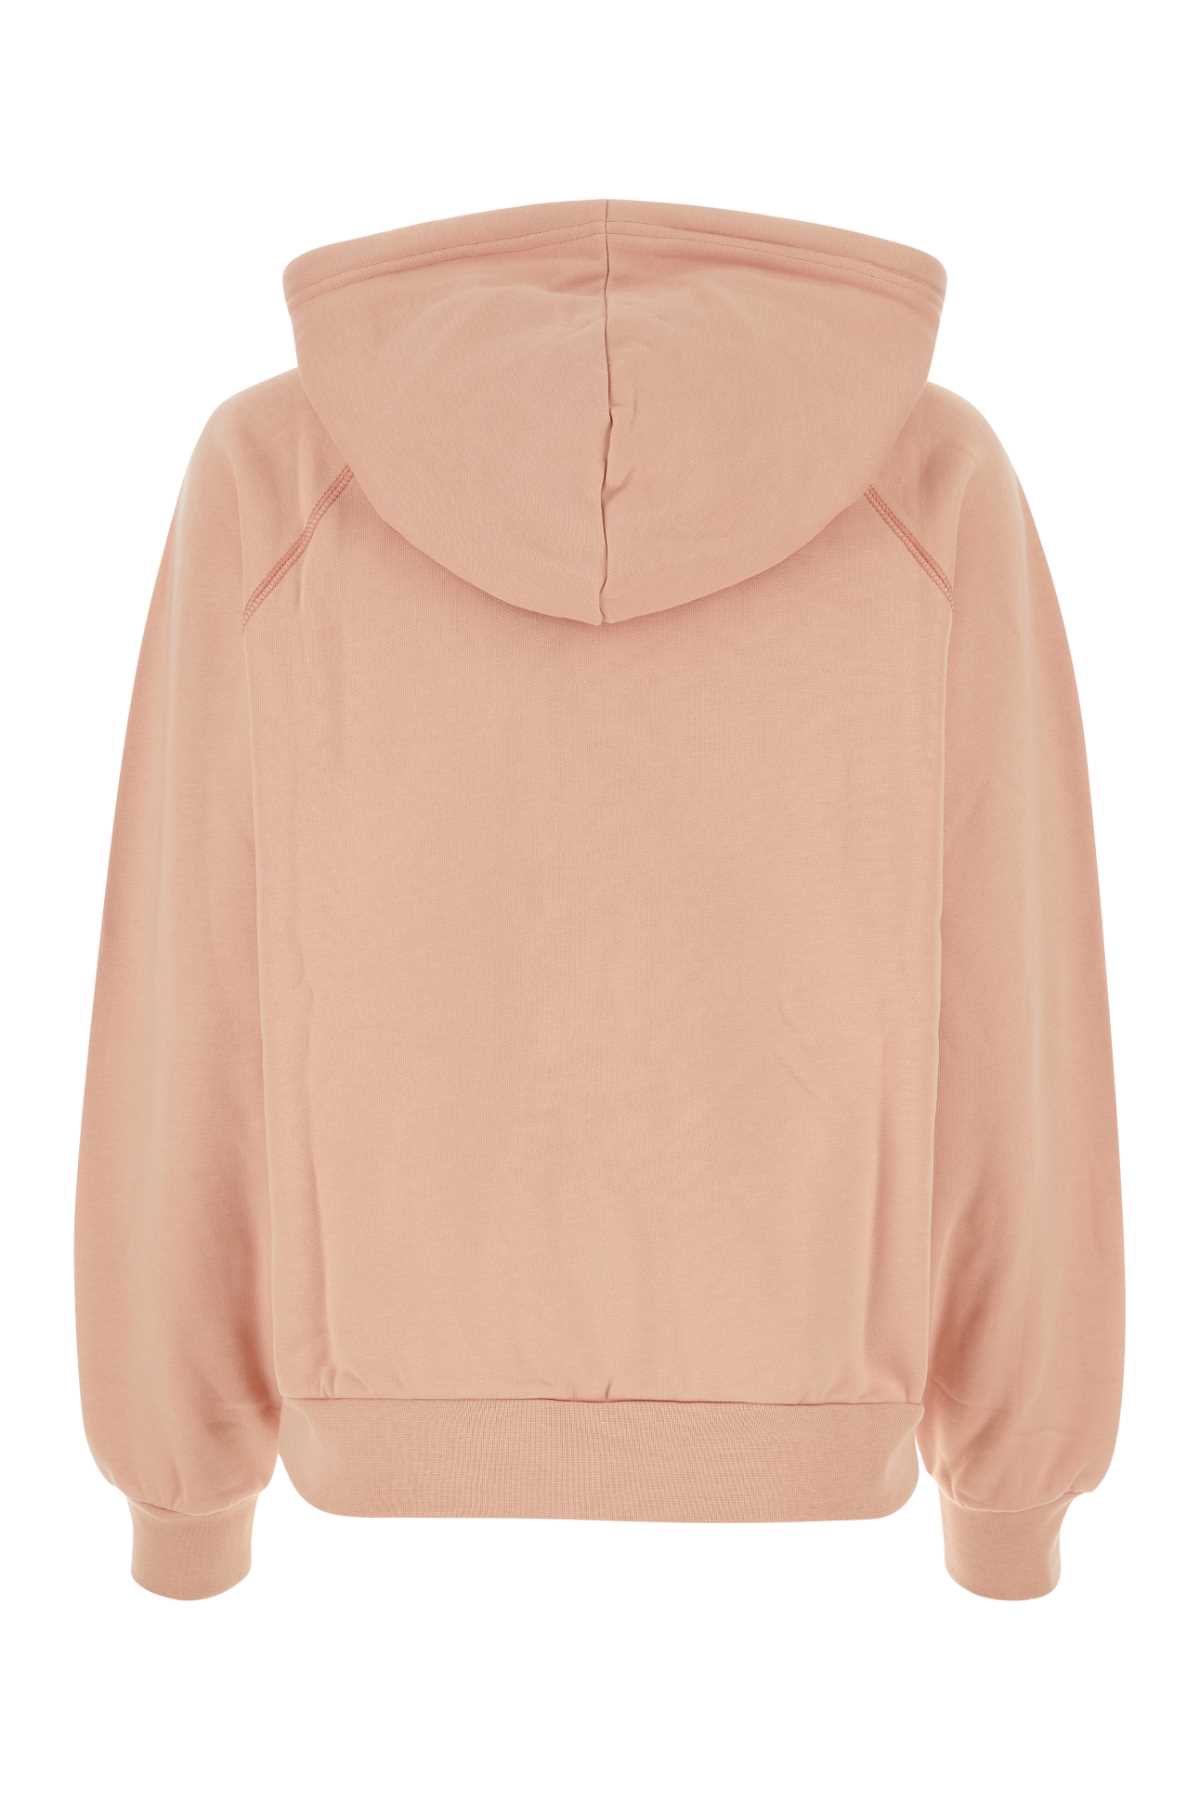 Shop Apc Pink Cotton Sweatshirt